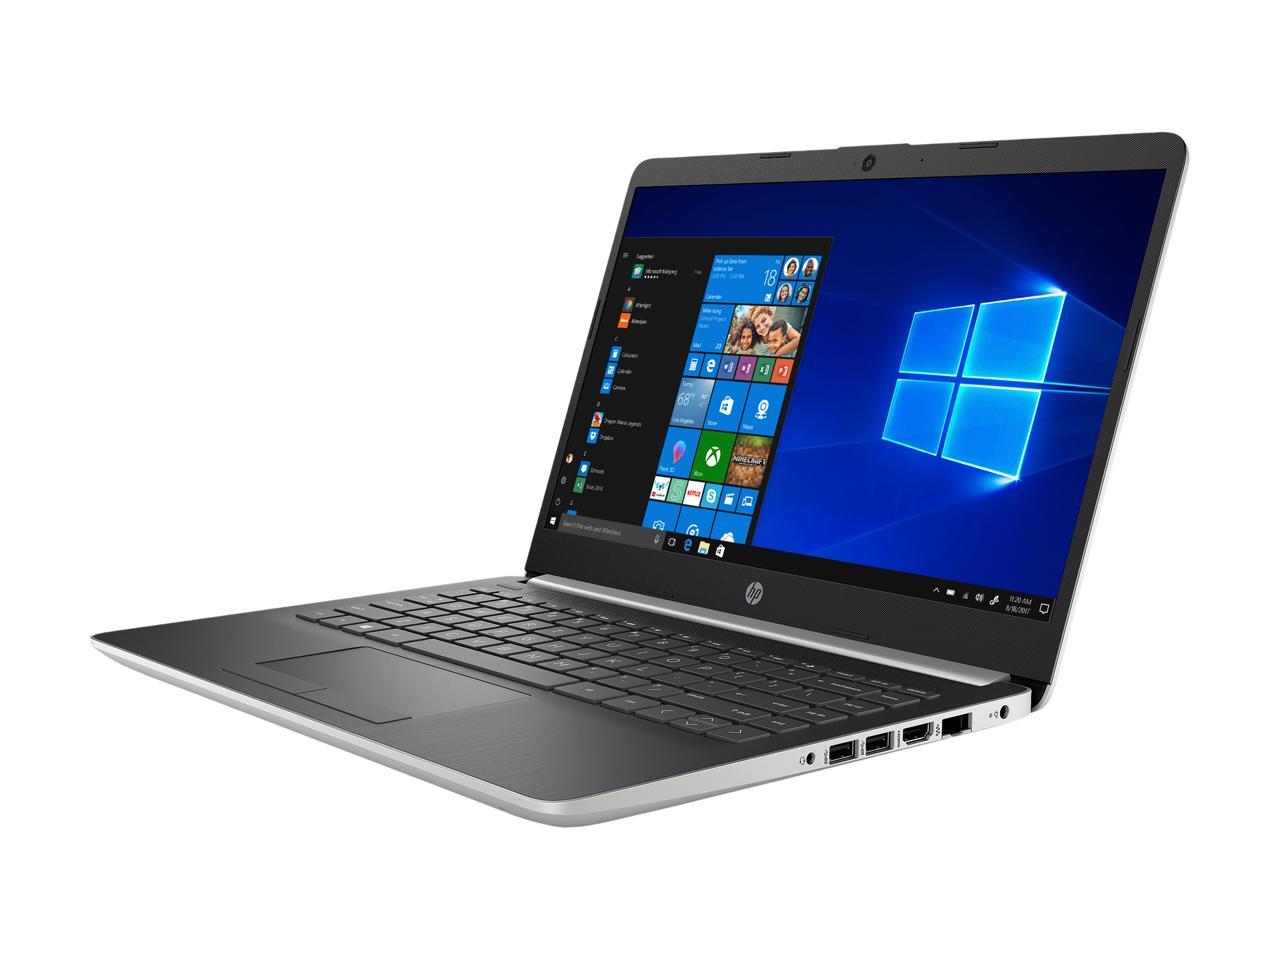 HP Laptop 14-dk0075nr AMD A4-Series A4-9125 (2.30 GHz) 4 GB Memory 64 GB eMMC SSD AMD Radeon R3 Series 14.0" Windows 10 S